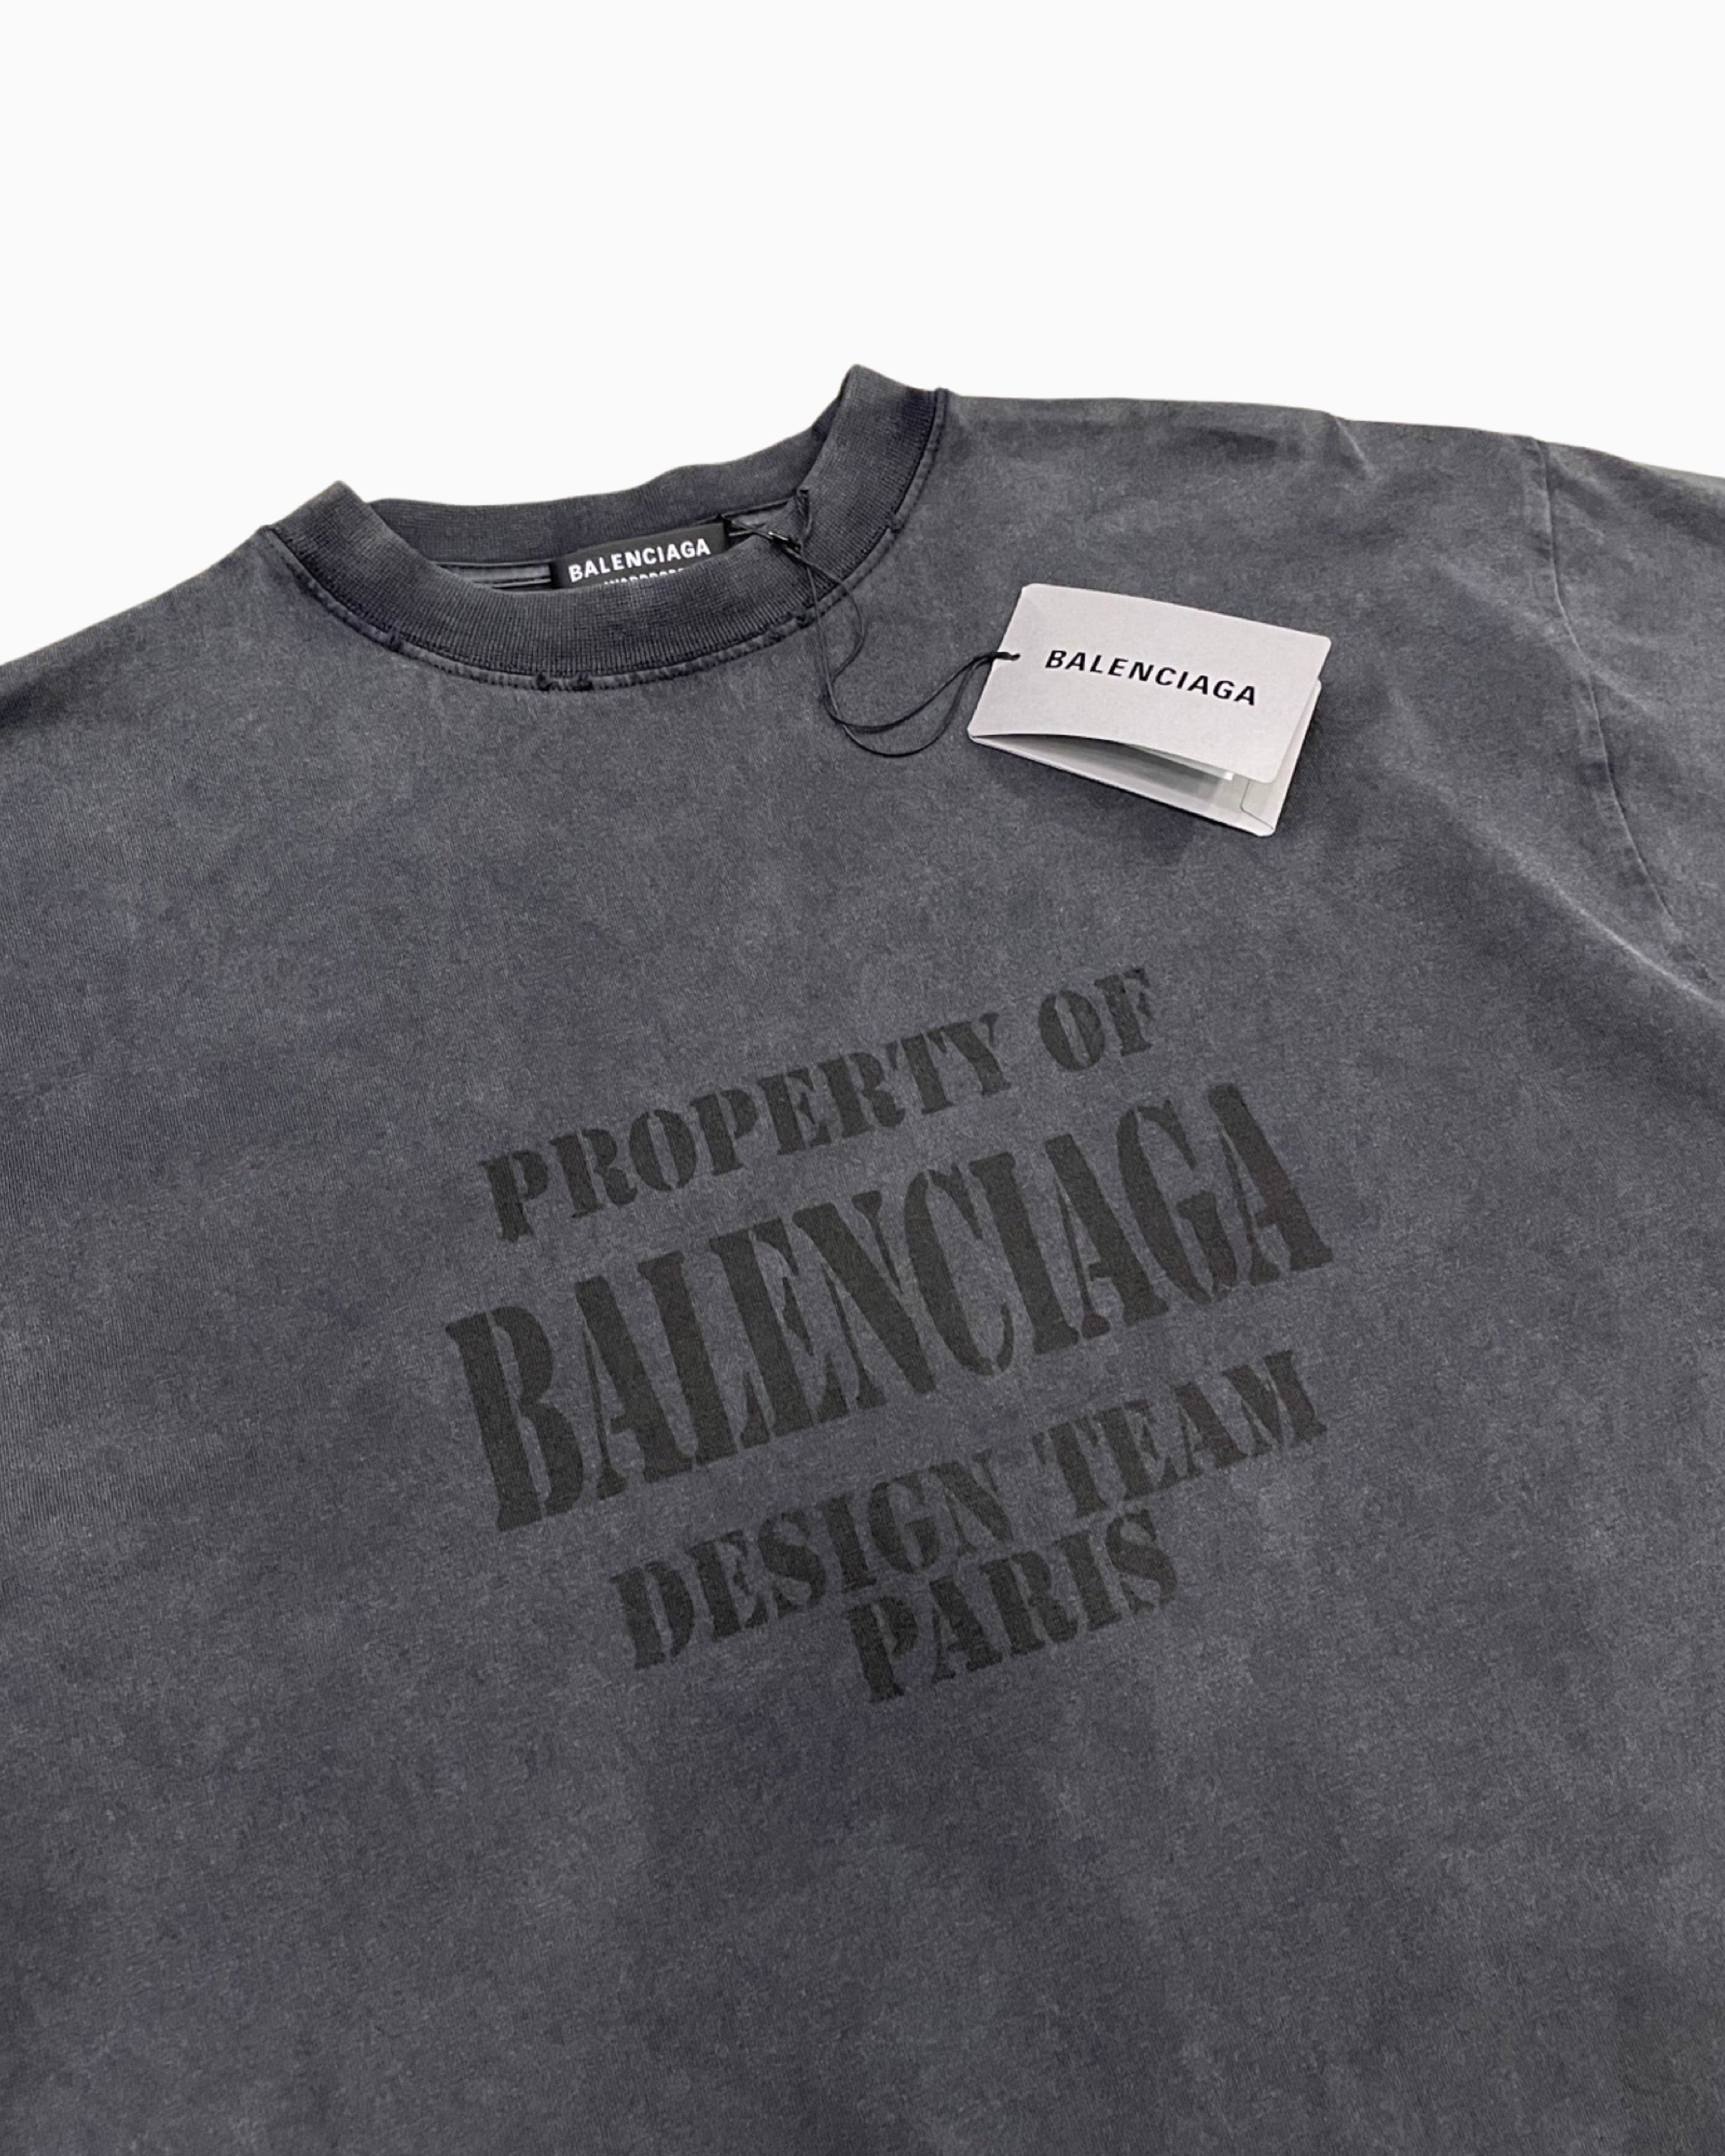 Balenciaga Drop Off FullBranded Football Kits for AW20 Collection